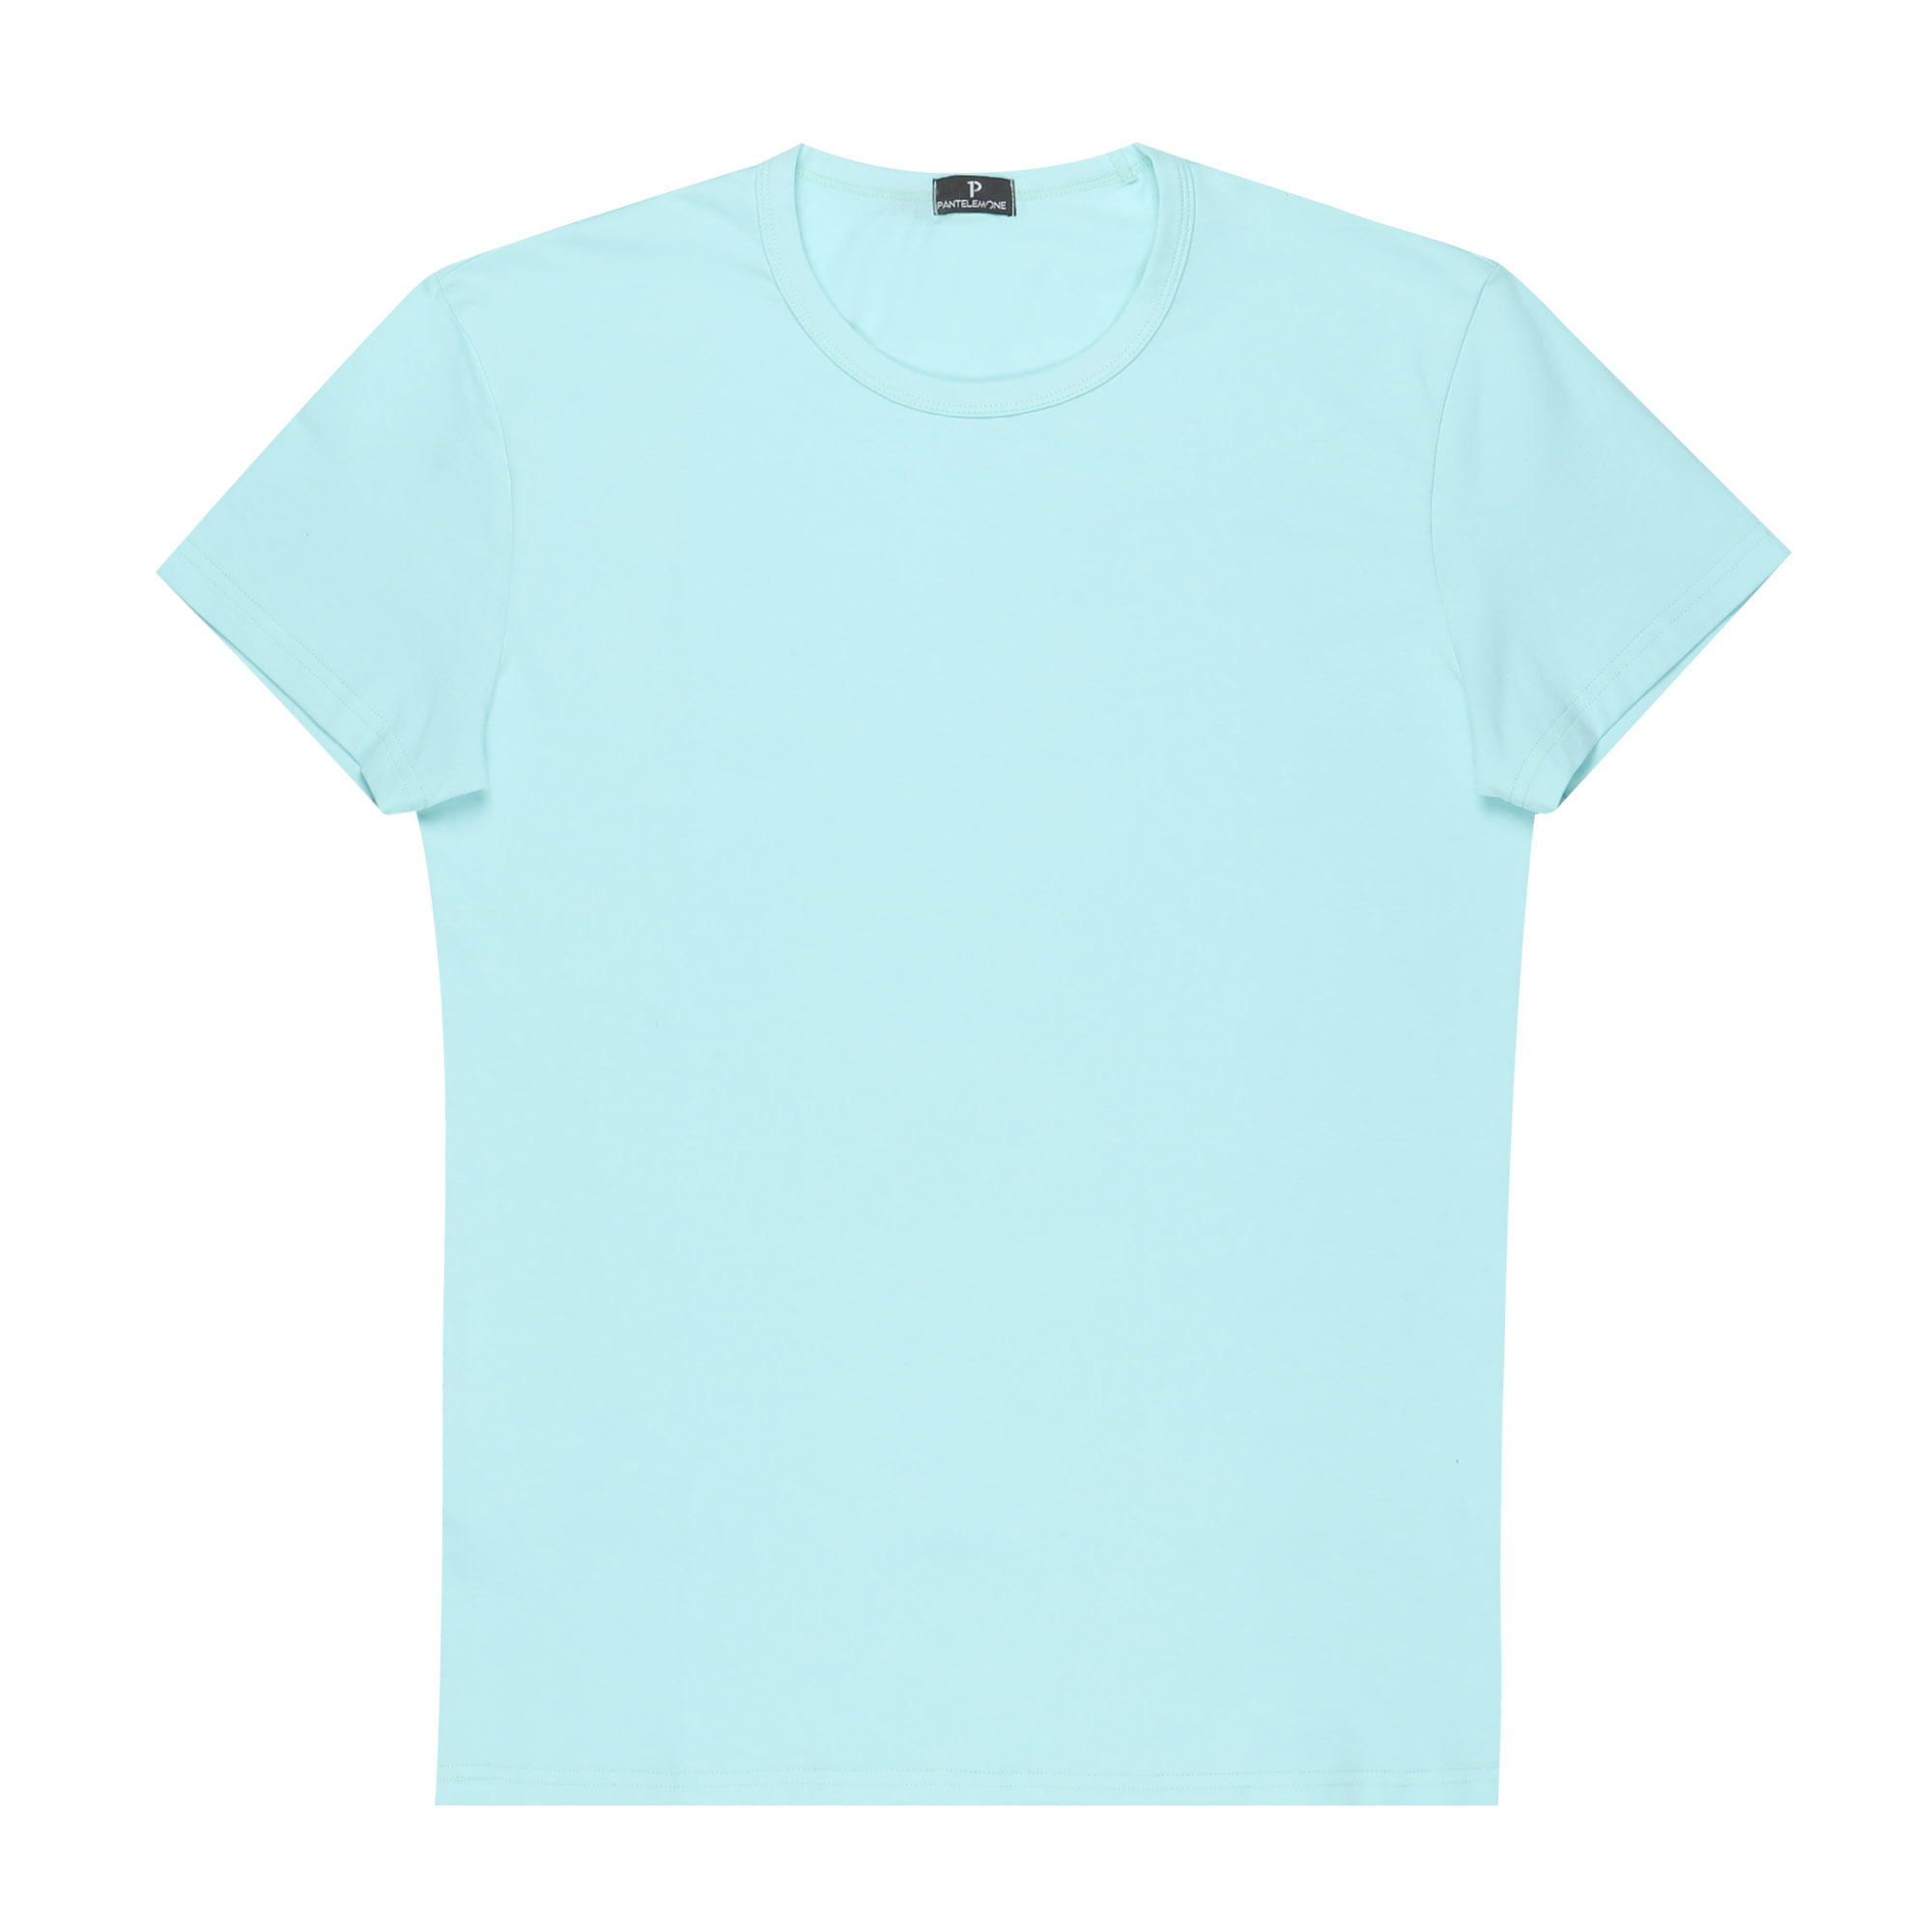 Мужская футболка Pantelemone MF-914 50 ментоловая, цвет ментоловый, размер 50 - фото 1